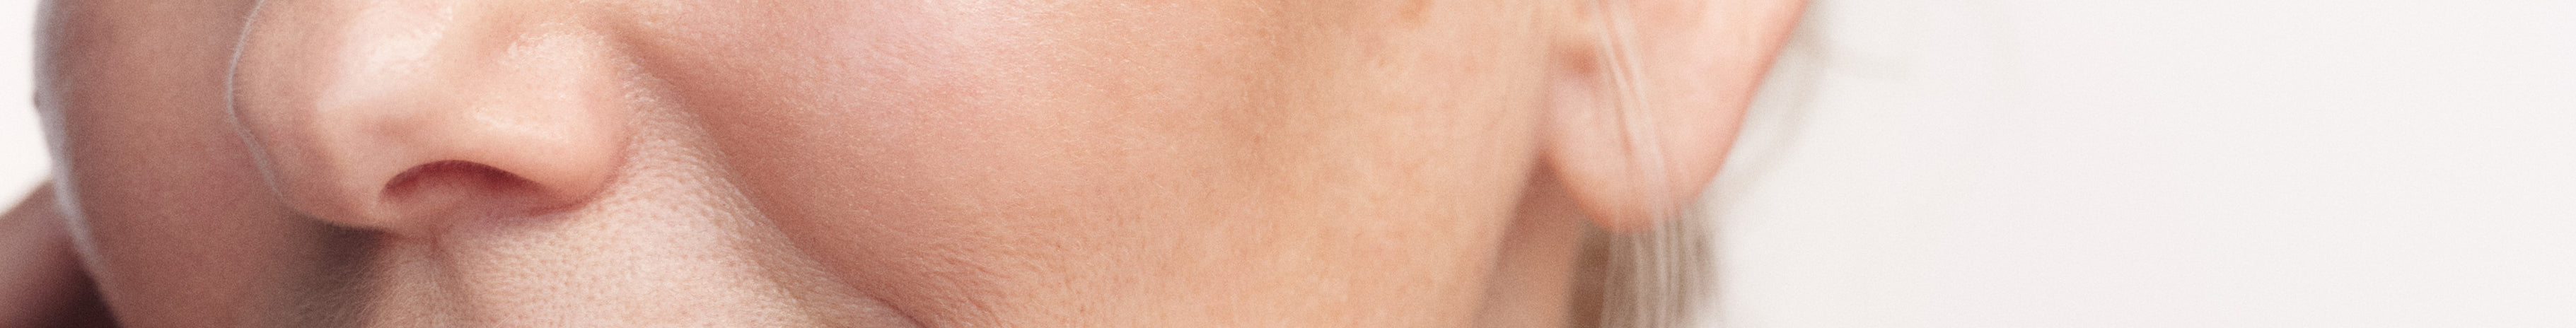 skin sensitivity and redness